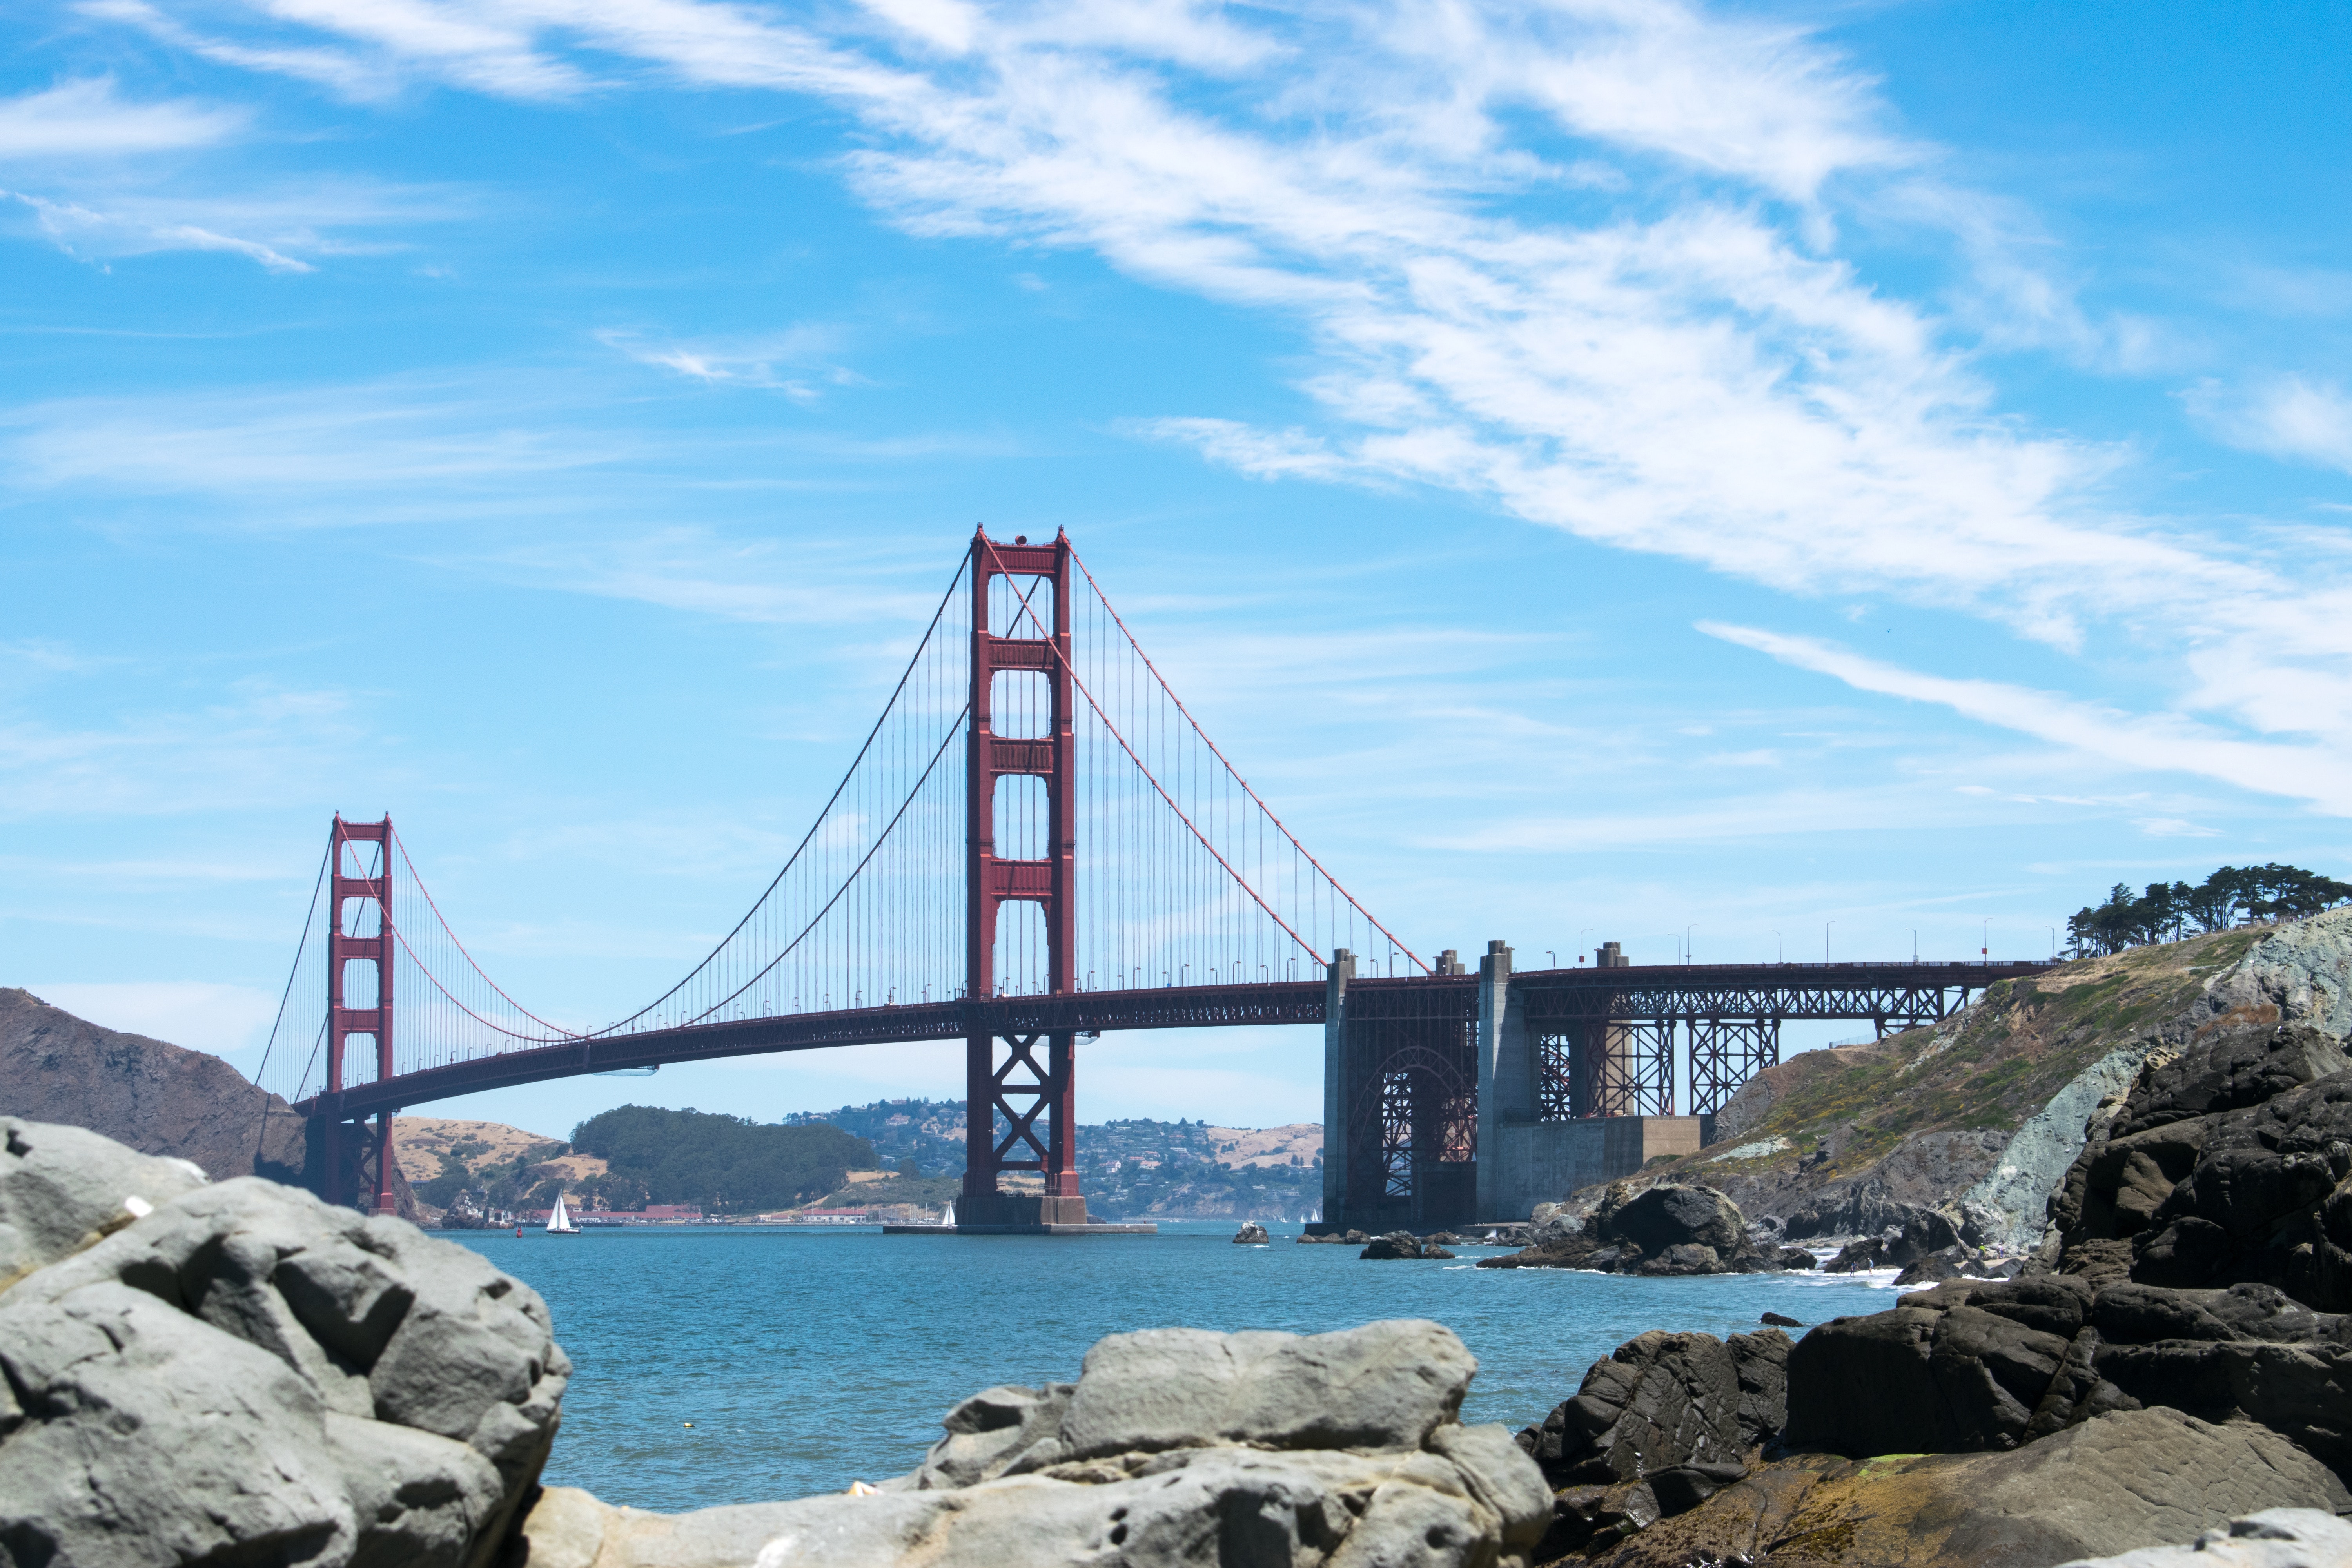 Golden gate bridge in san francisco california under blue sky during daytime photo